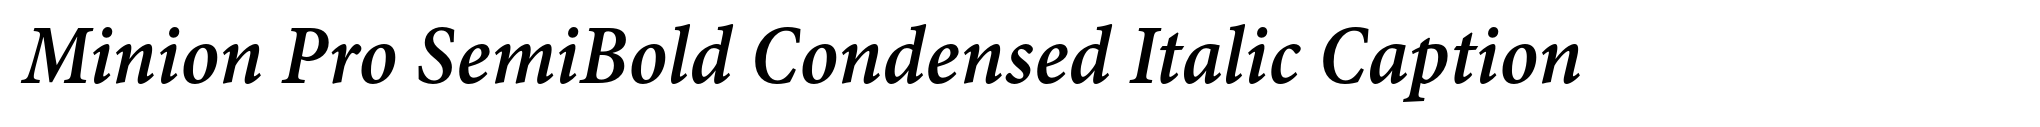 Minion Pro SemiBold Condensed Italic Caption image